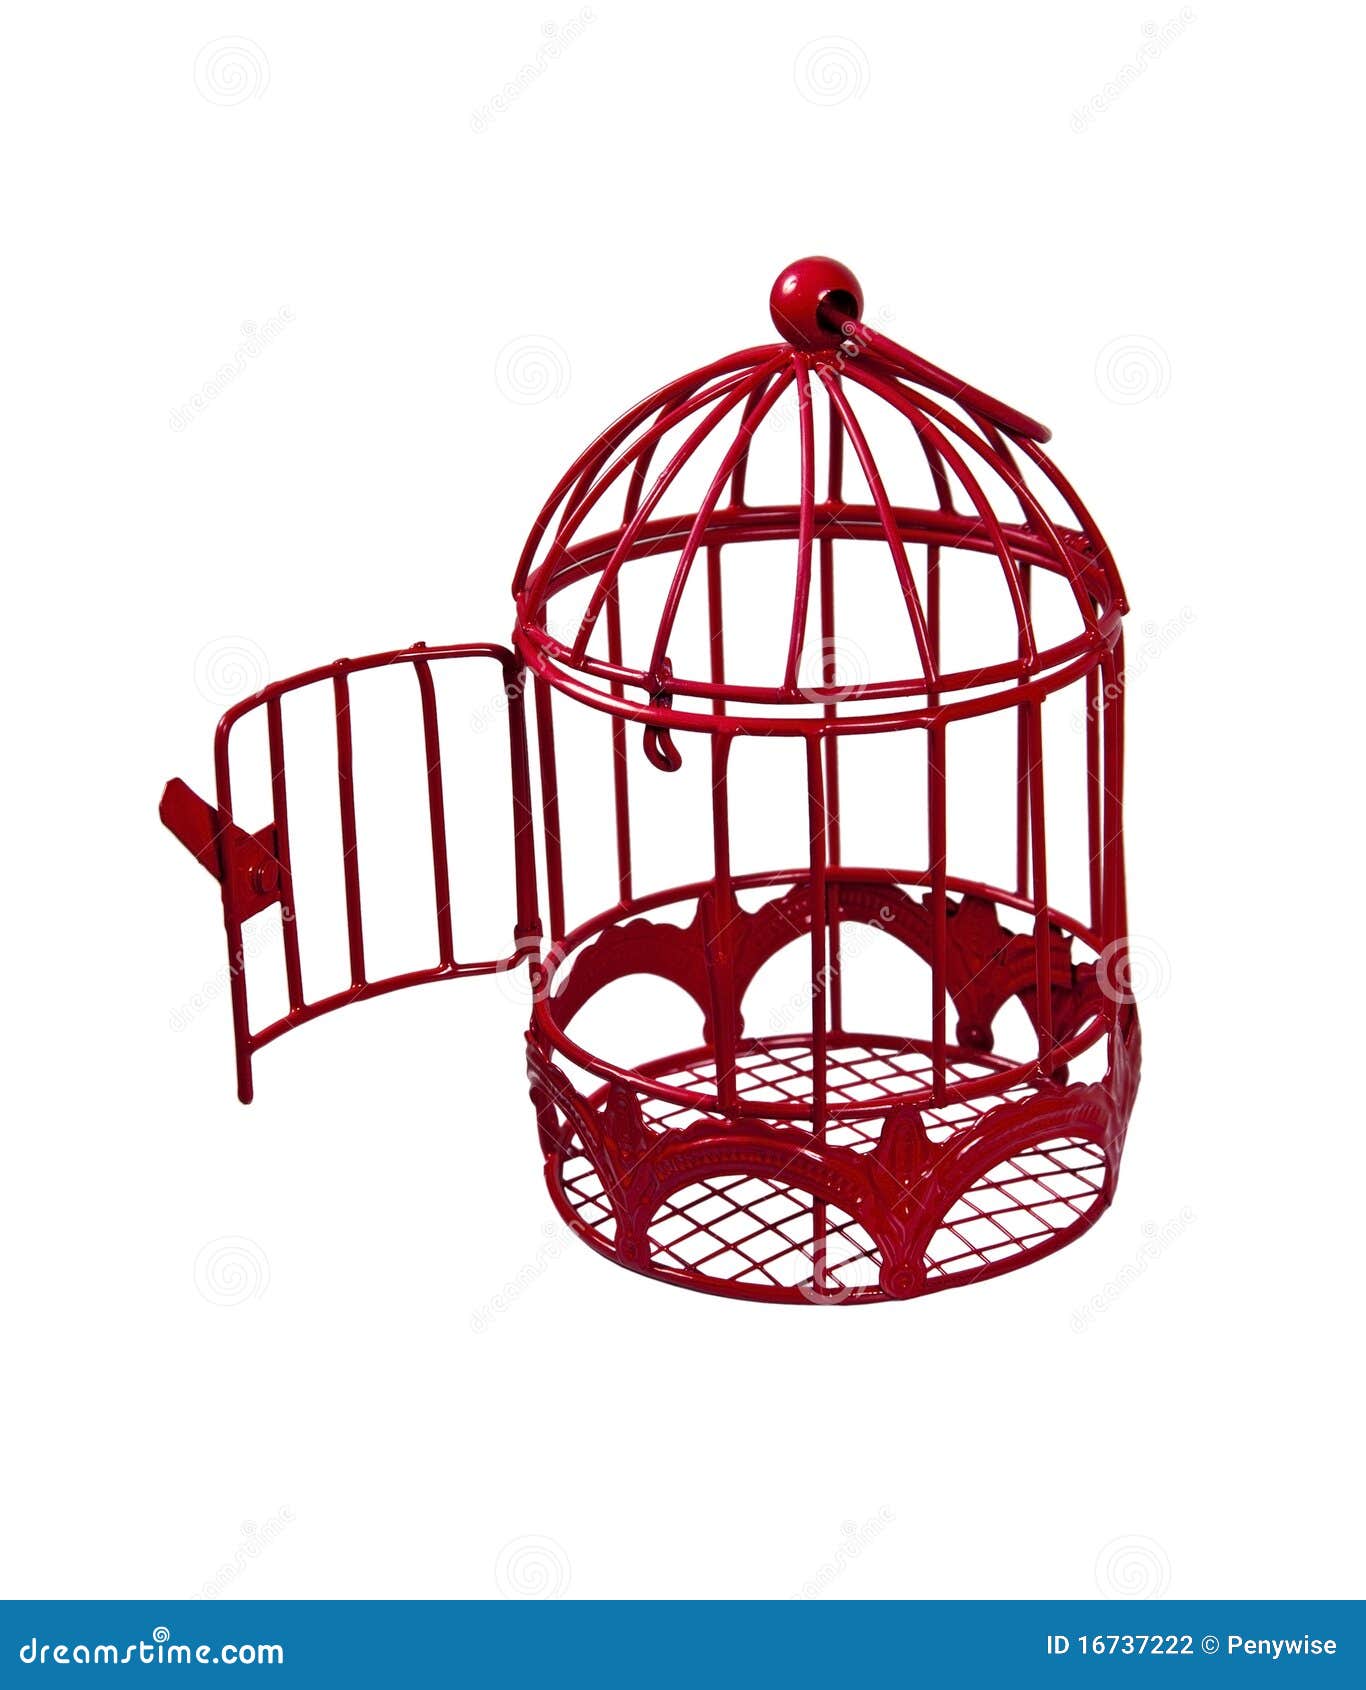 7600 Birdcage Illustrations RoyaltyFree Vector Graphics  Clip Art   iStock  Empty birdcage Open birdcage Vintage birdcage